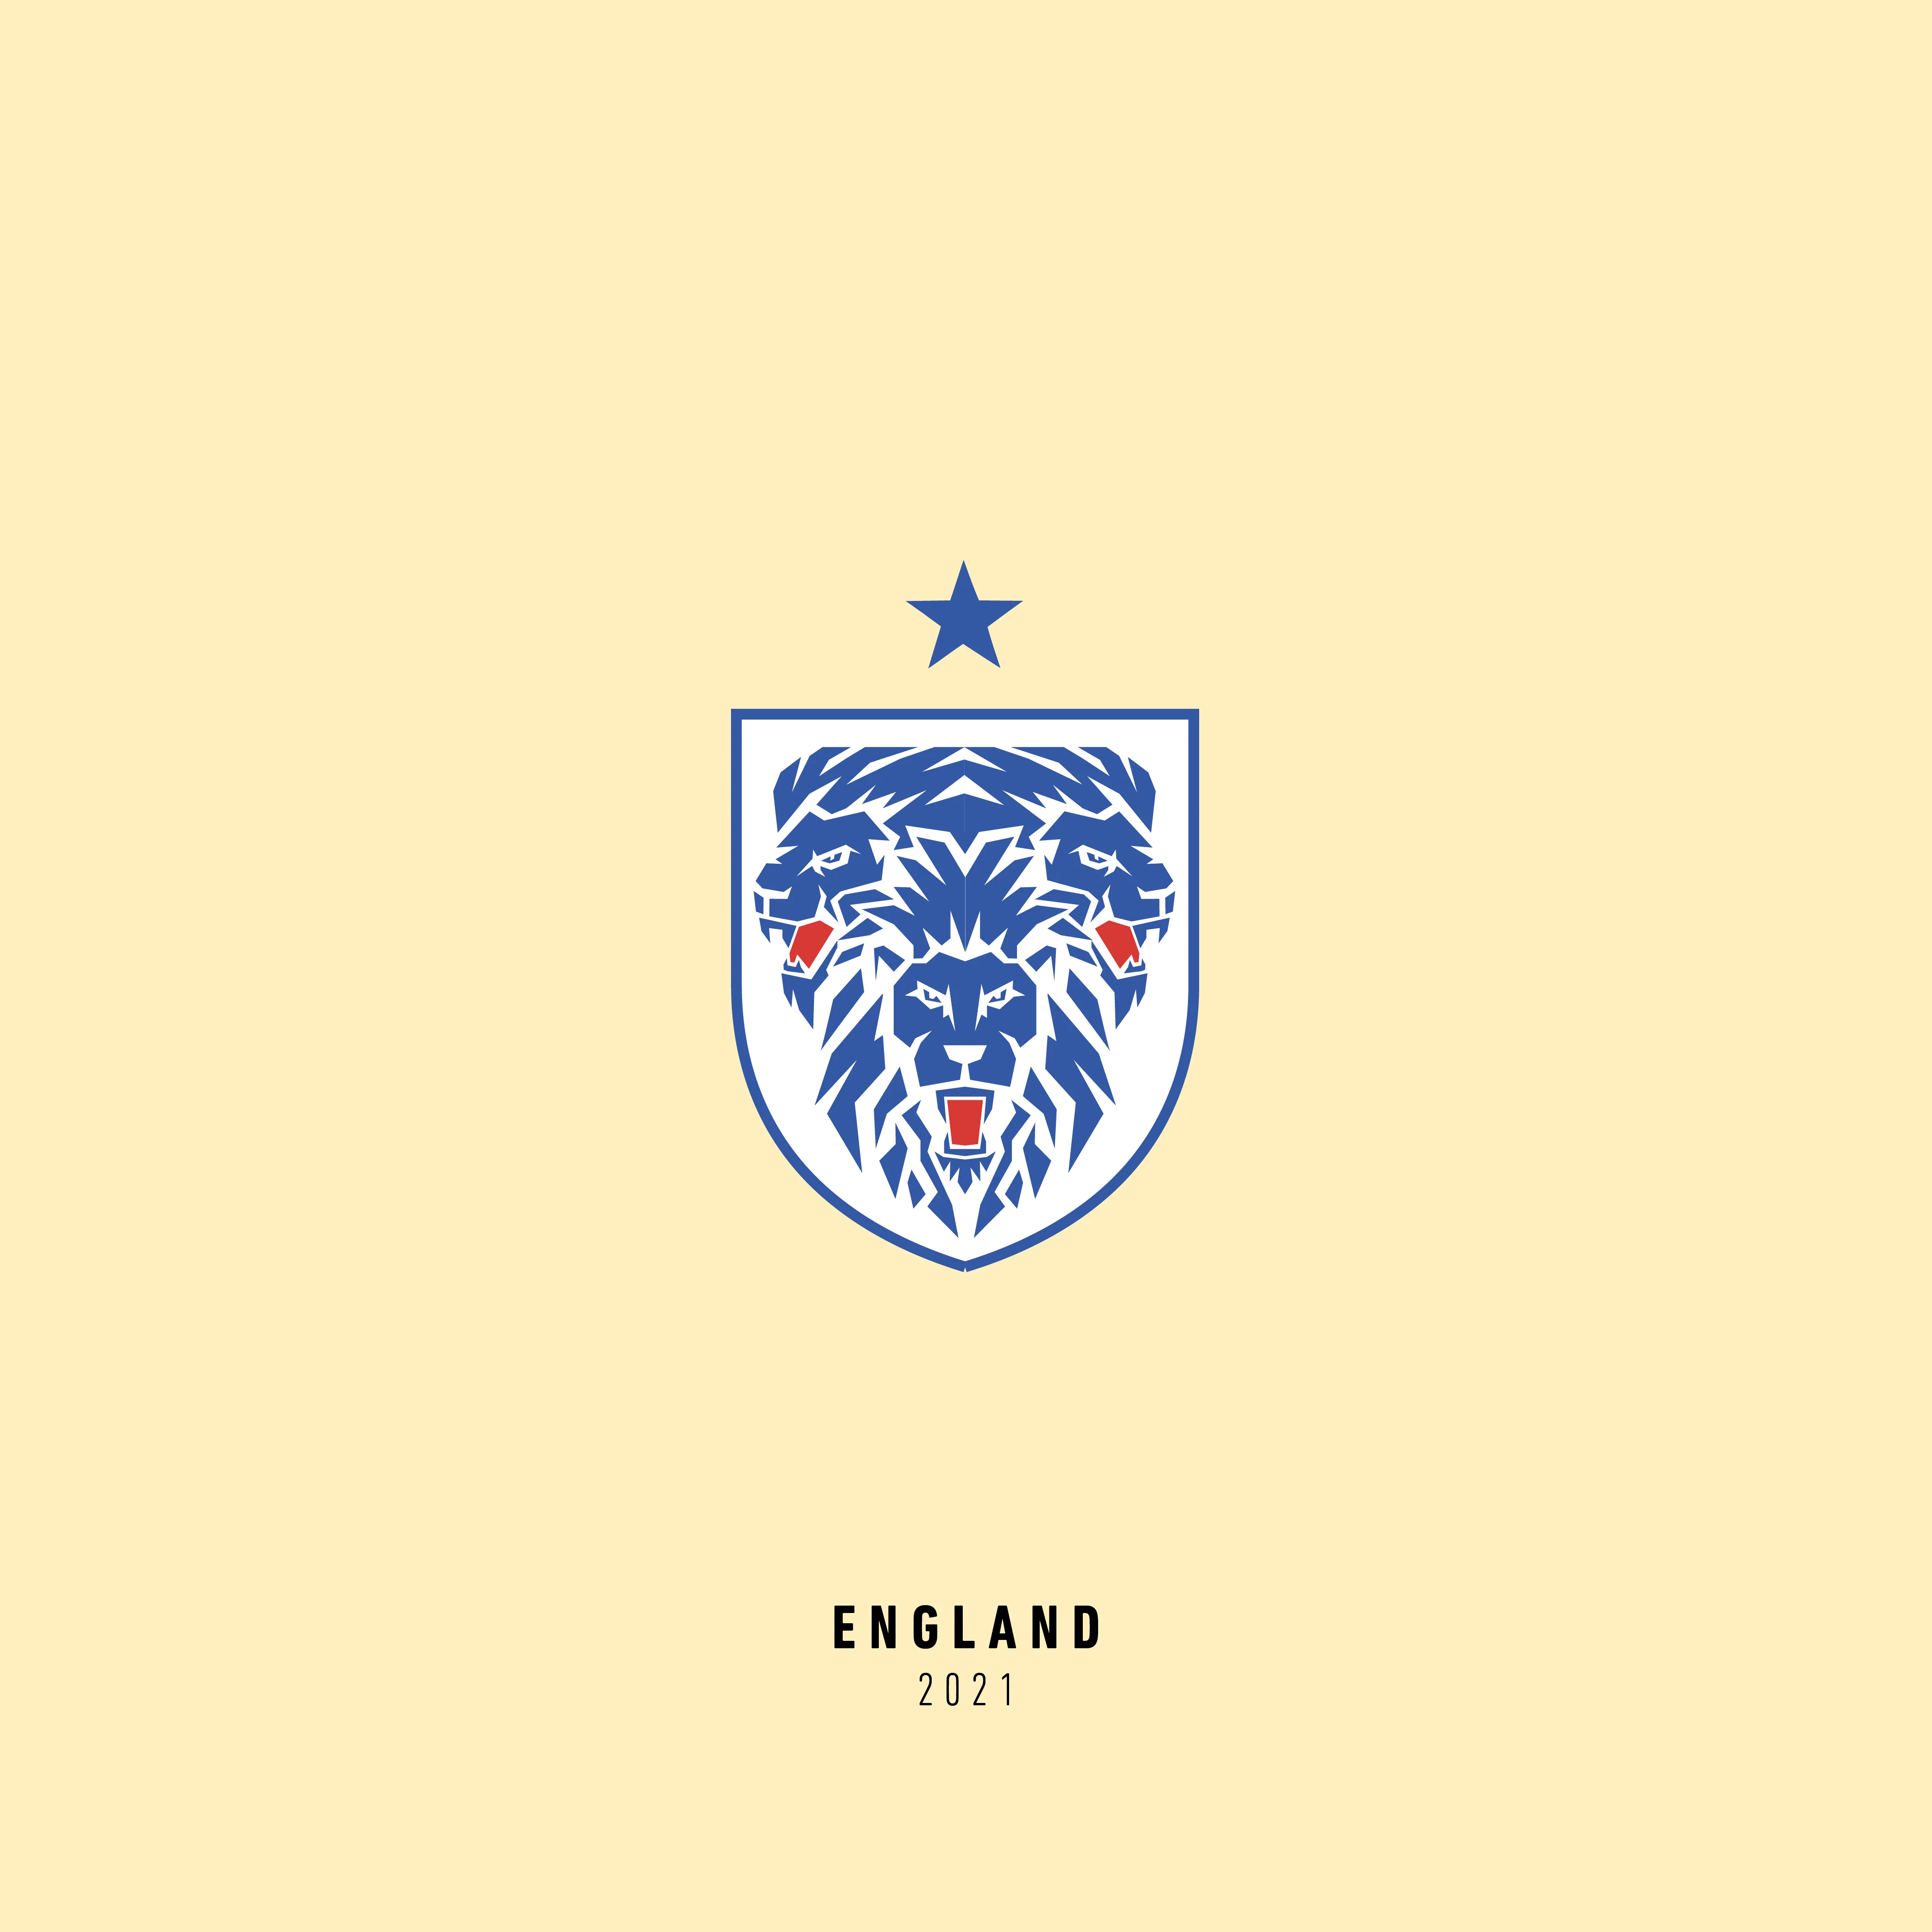 Euro2021 England 2021 1